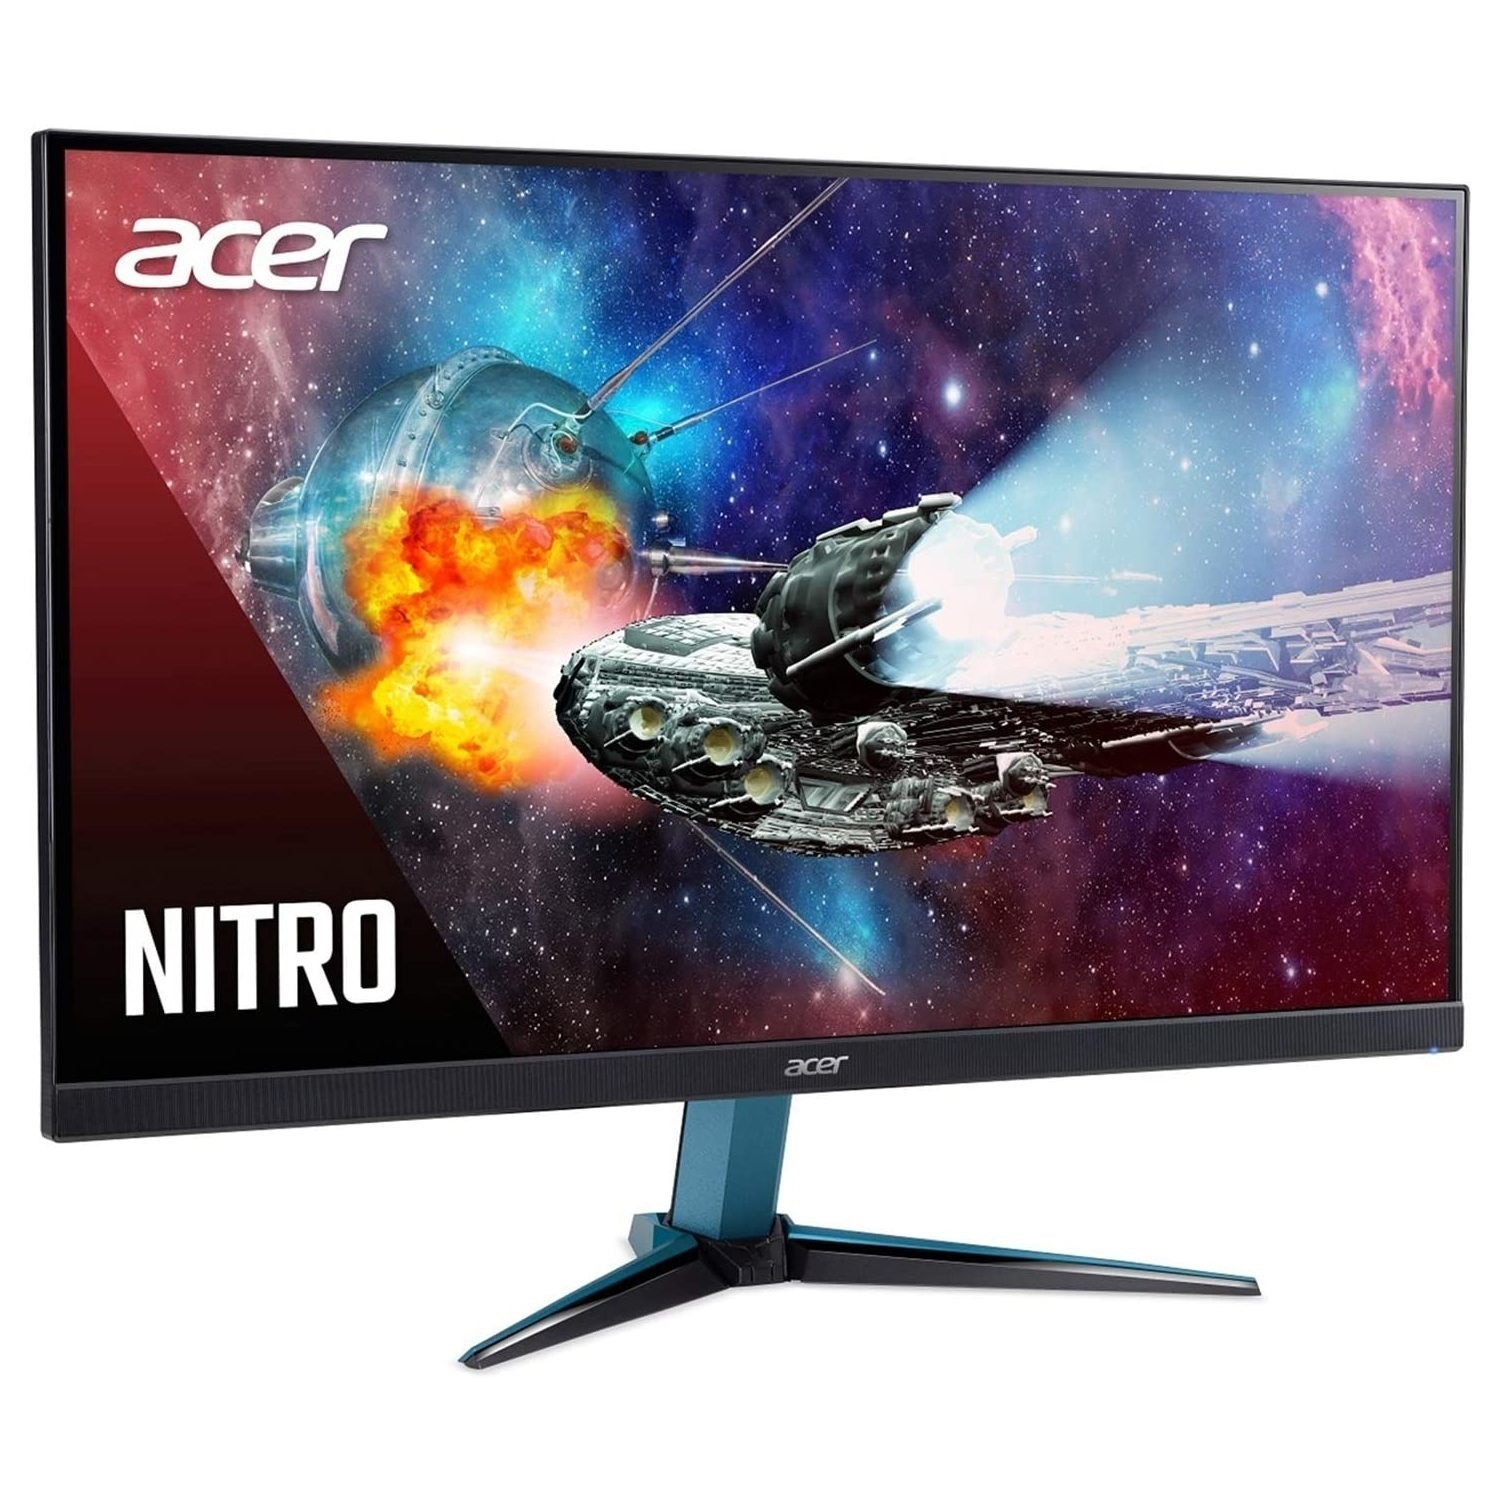 Acer Nitro VG272UV 27 QHD 144Hz Gaming Monitor - Laptops Direct